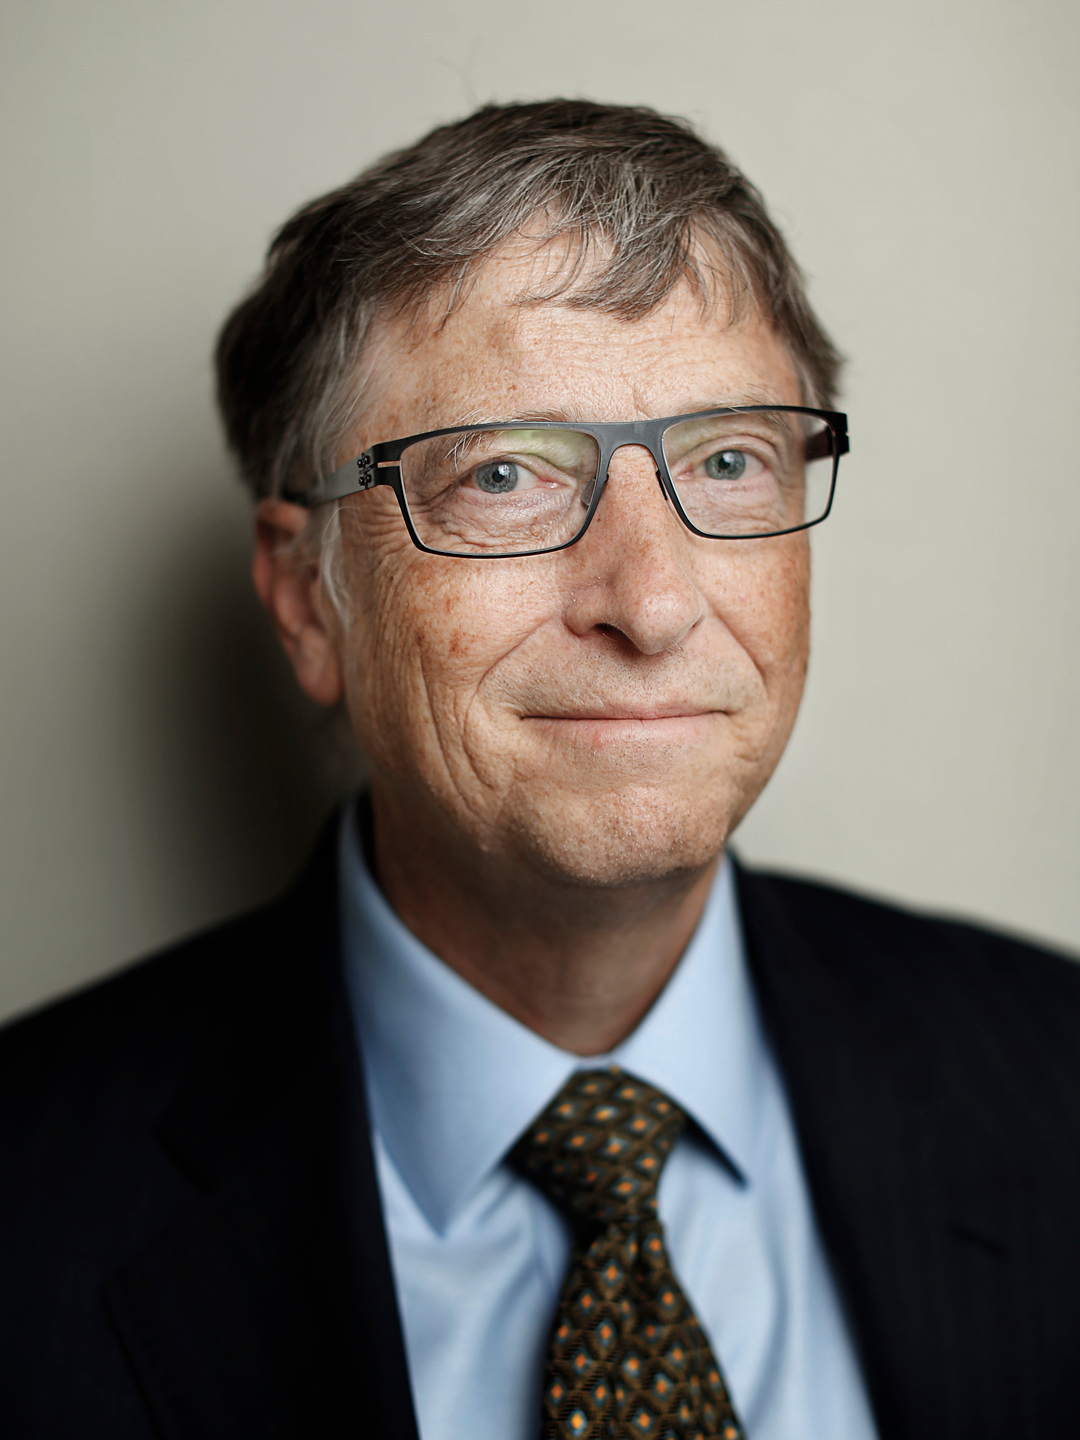 Bill Gates life story